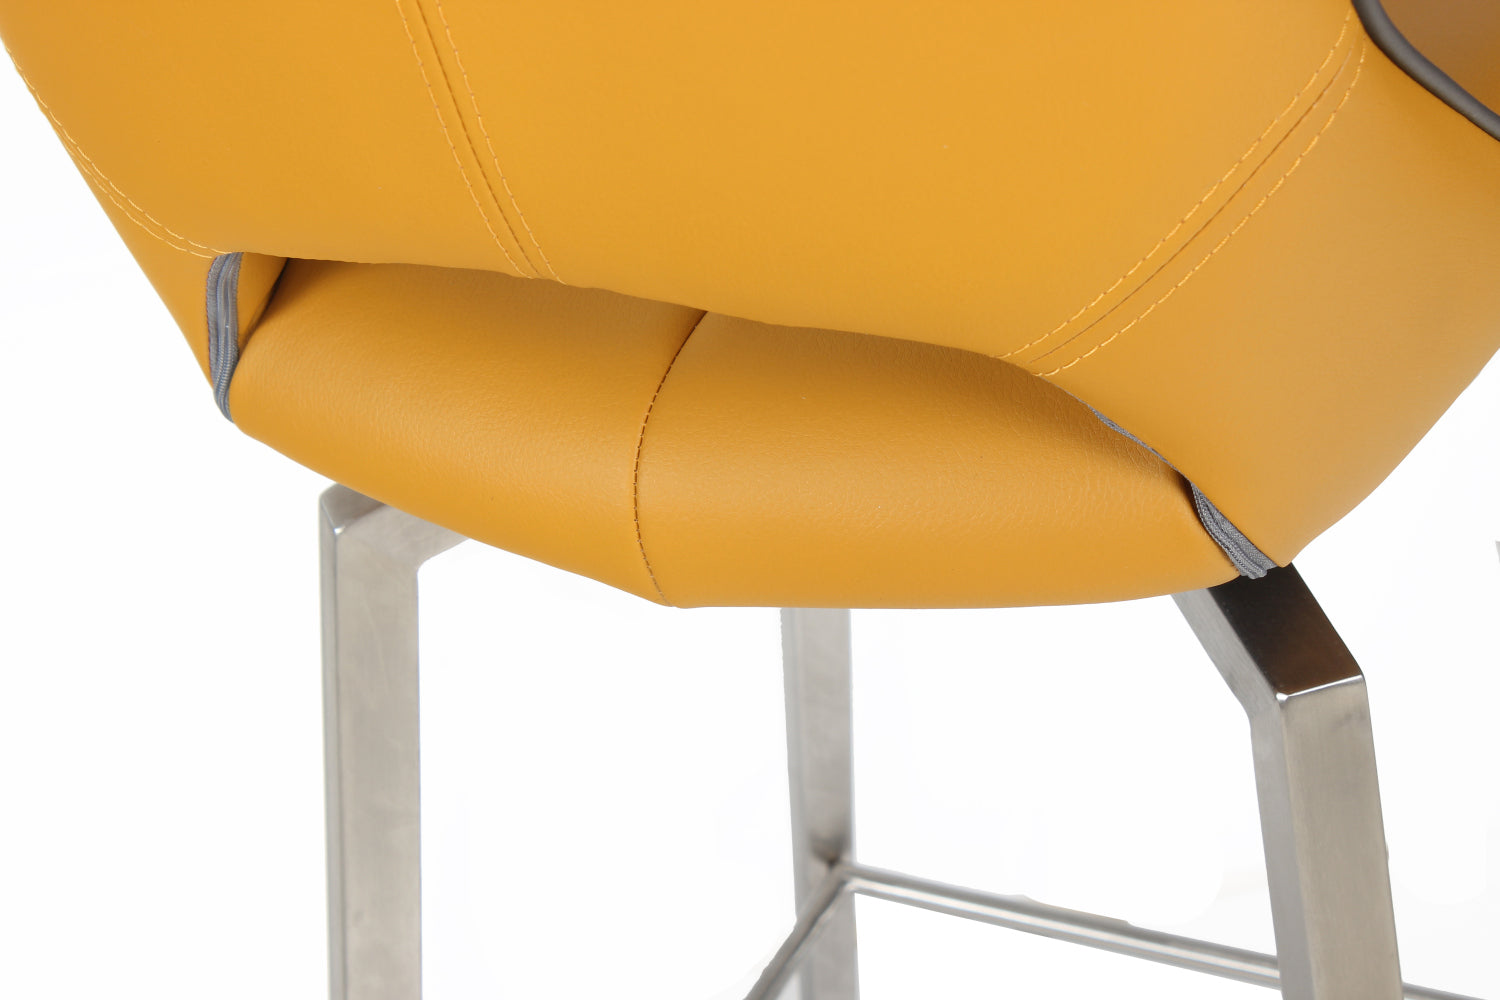 Mako swivel bar stools from Top Secret Furniture